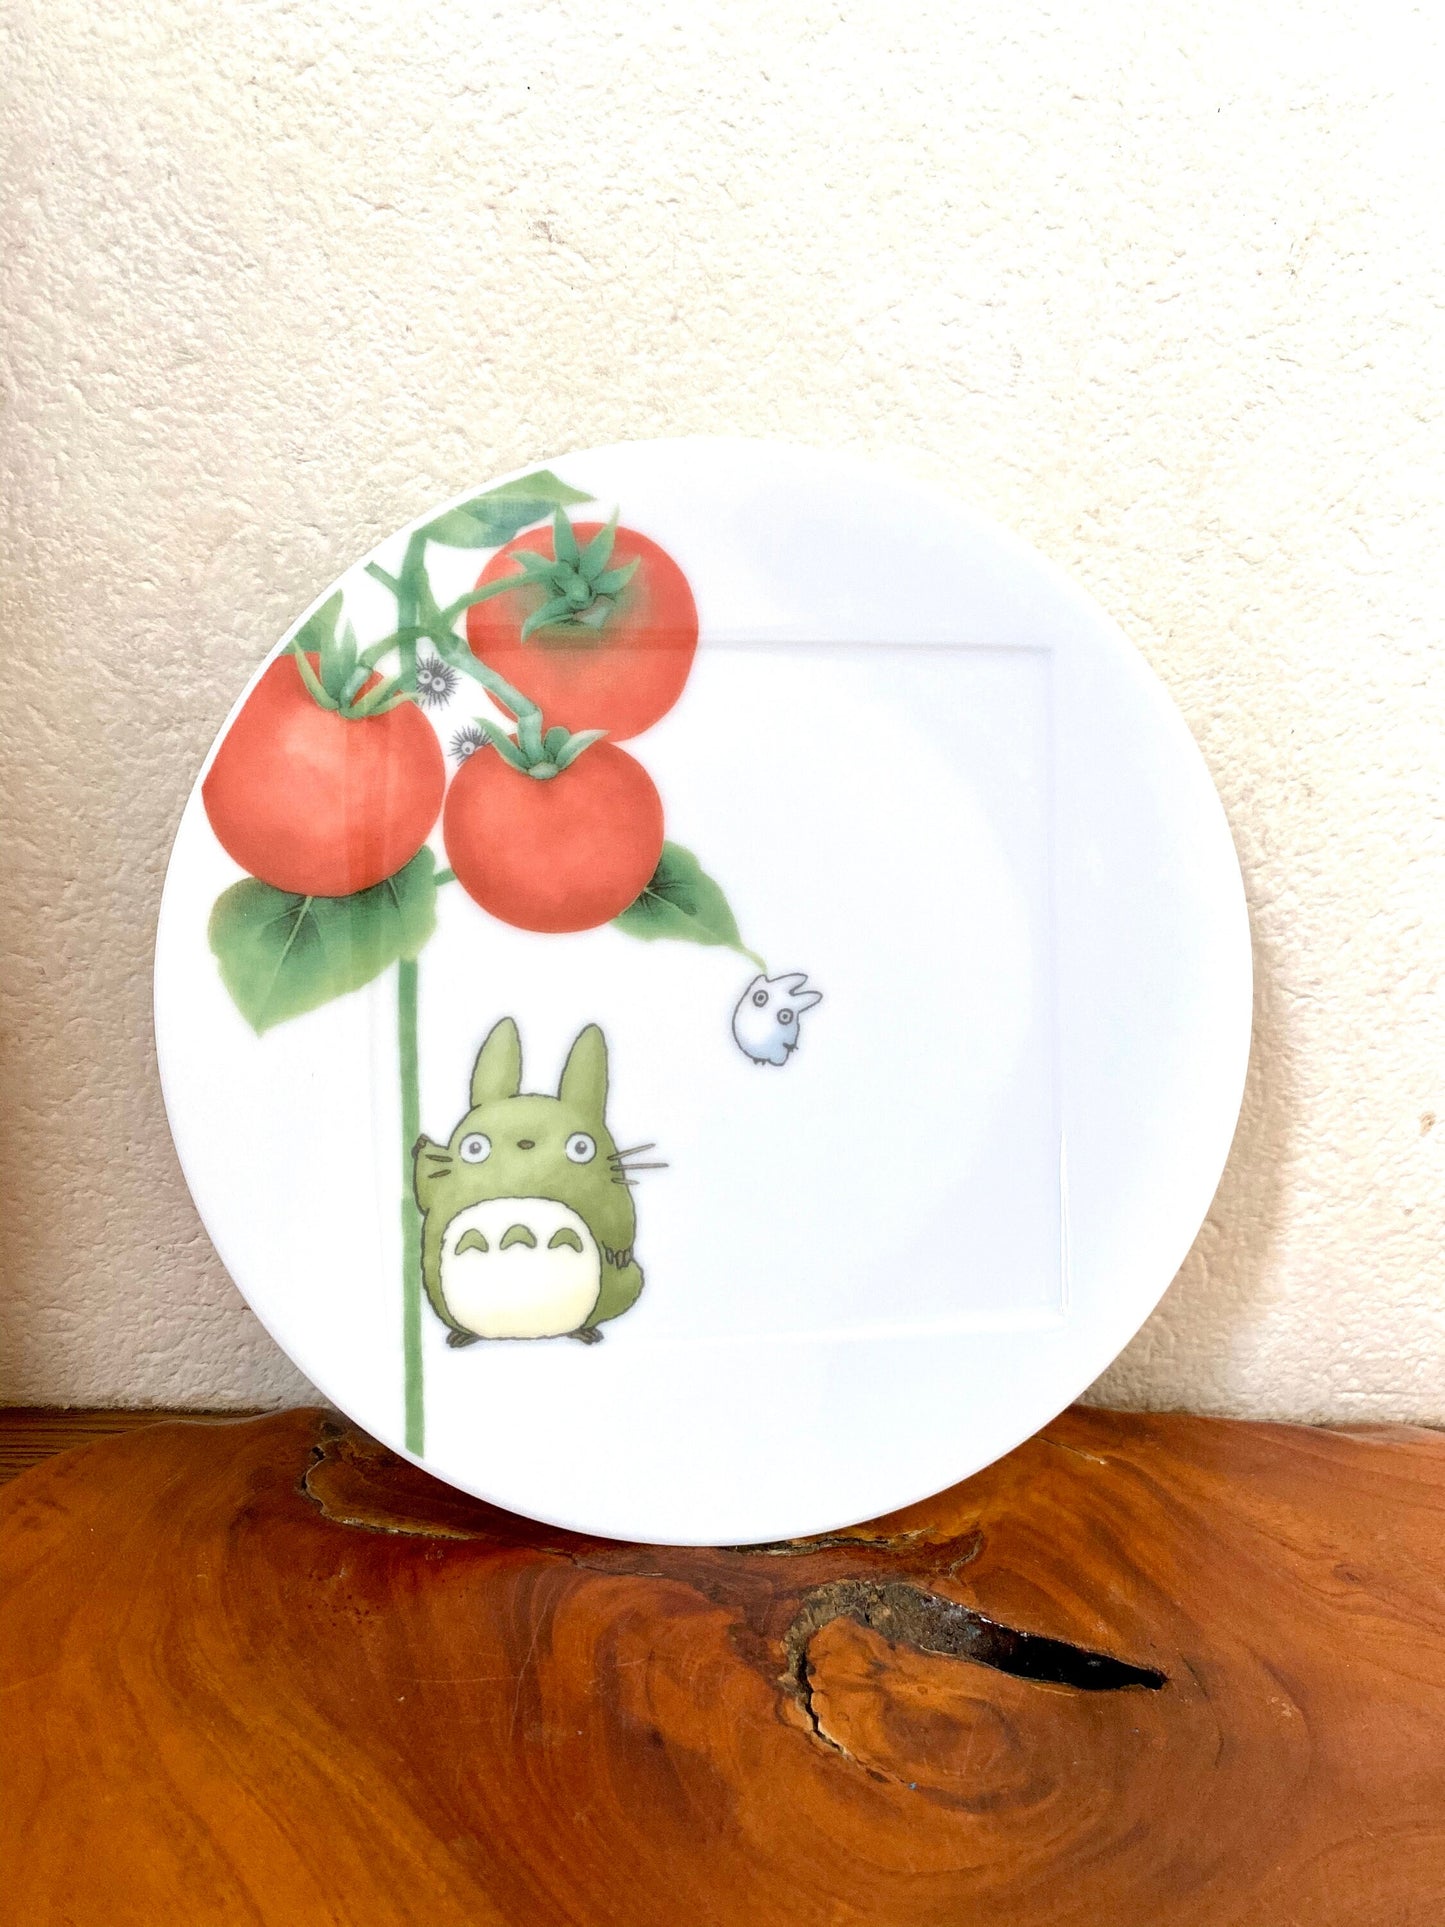 My Neighbor Totoro plate, collectible by Noritake - 15.5cm/6.1" diameter with original box